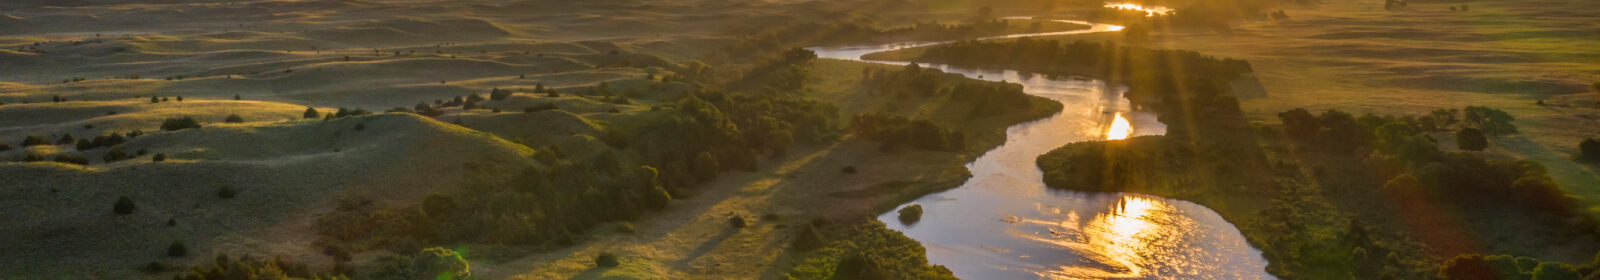 aerial shot of a river running through rural fields